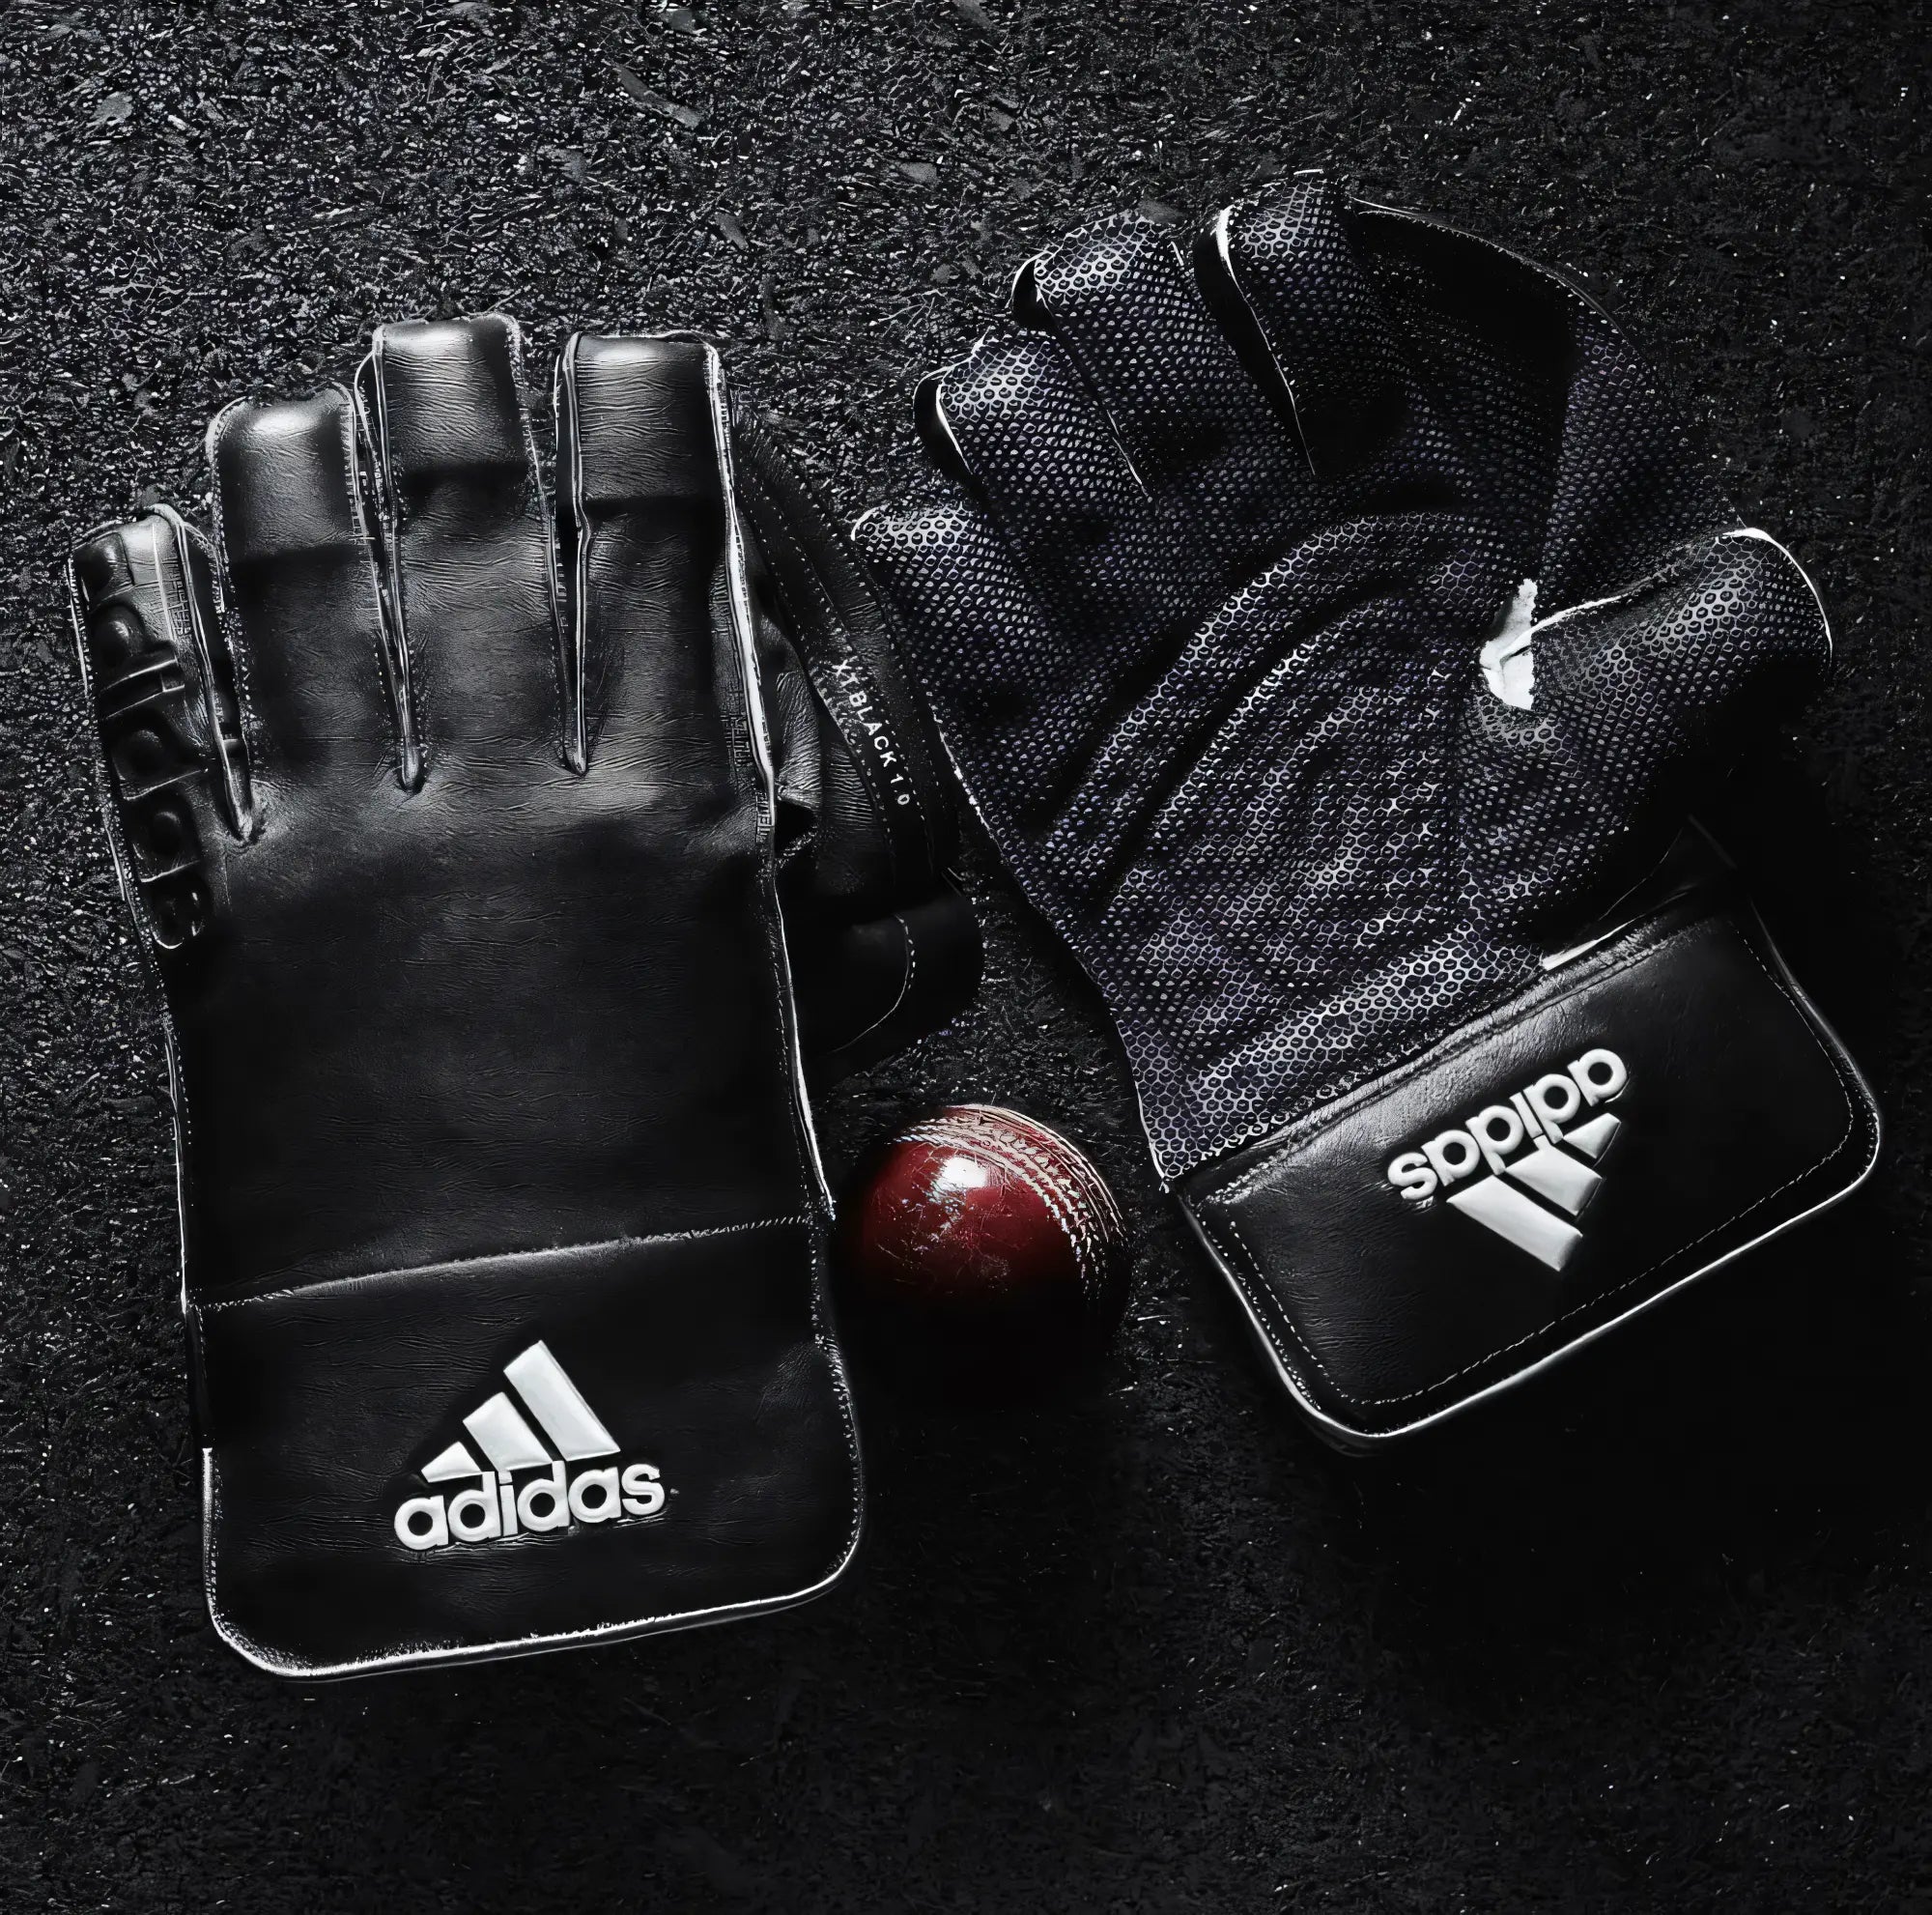 Adidas Cricket Wicket Keeping Gloves, Pads Range